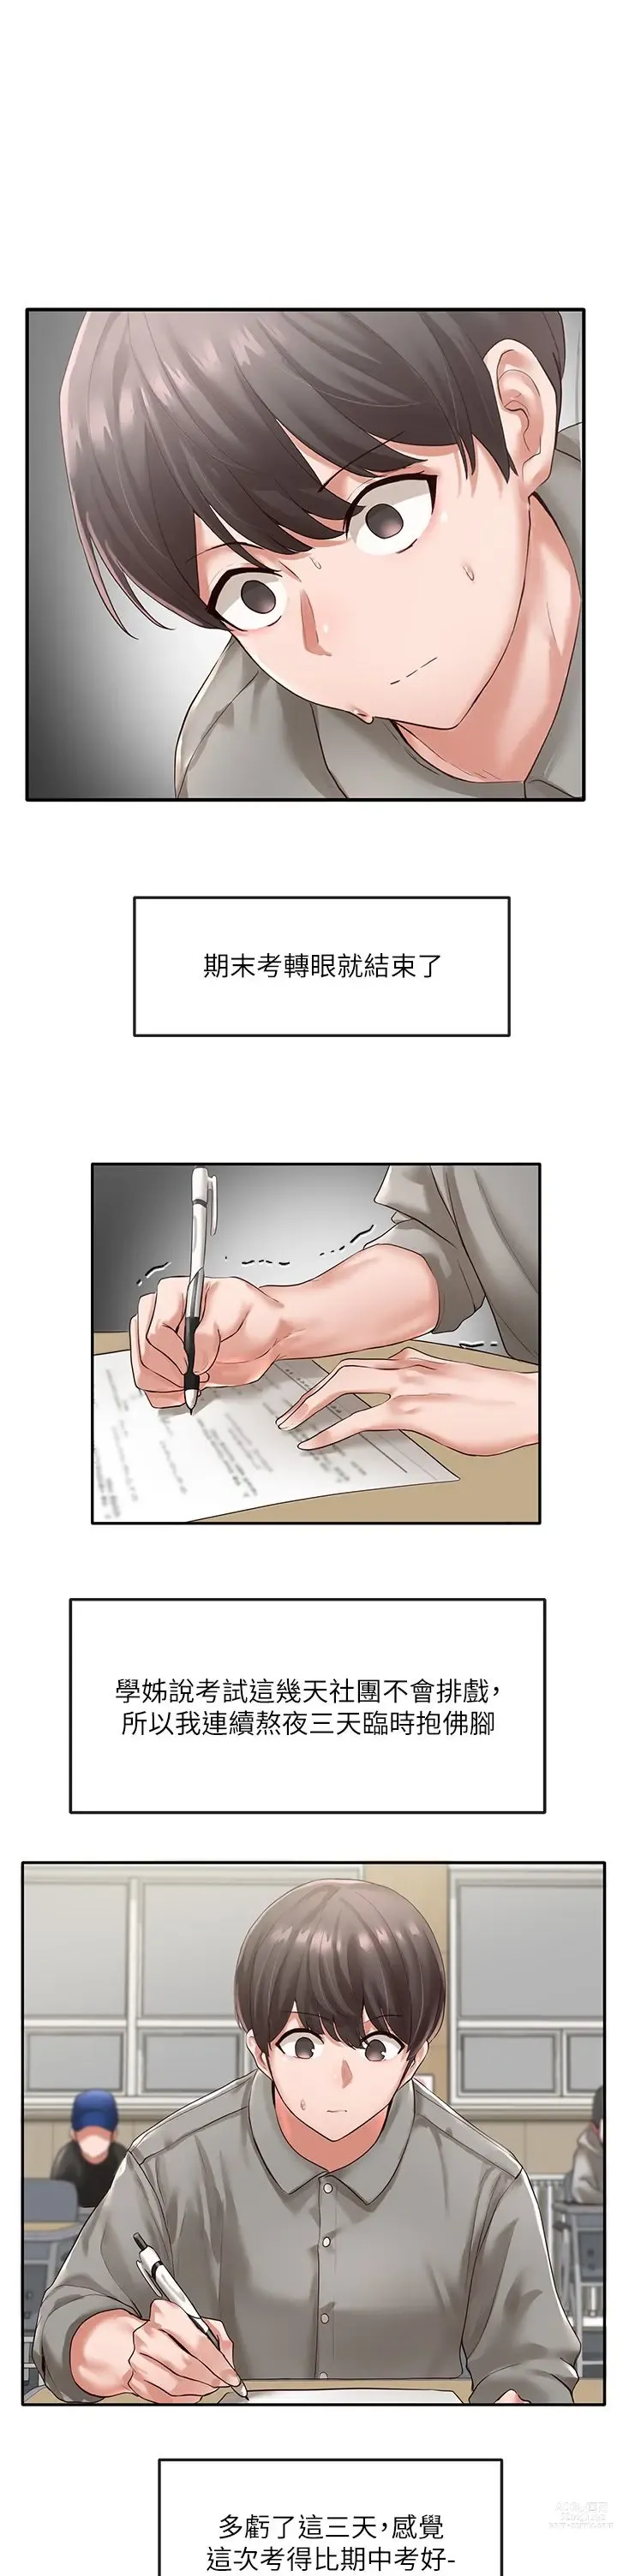 Page 5 of manga 社团学姐/Circles 51-100